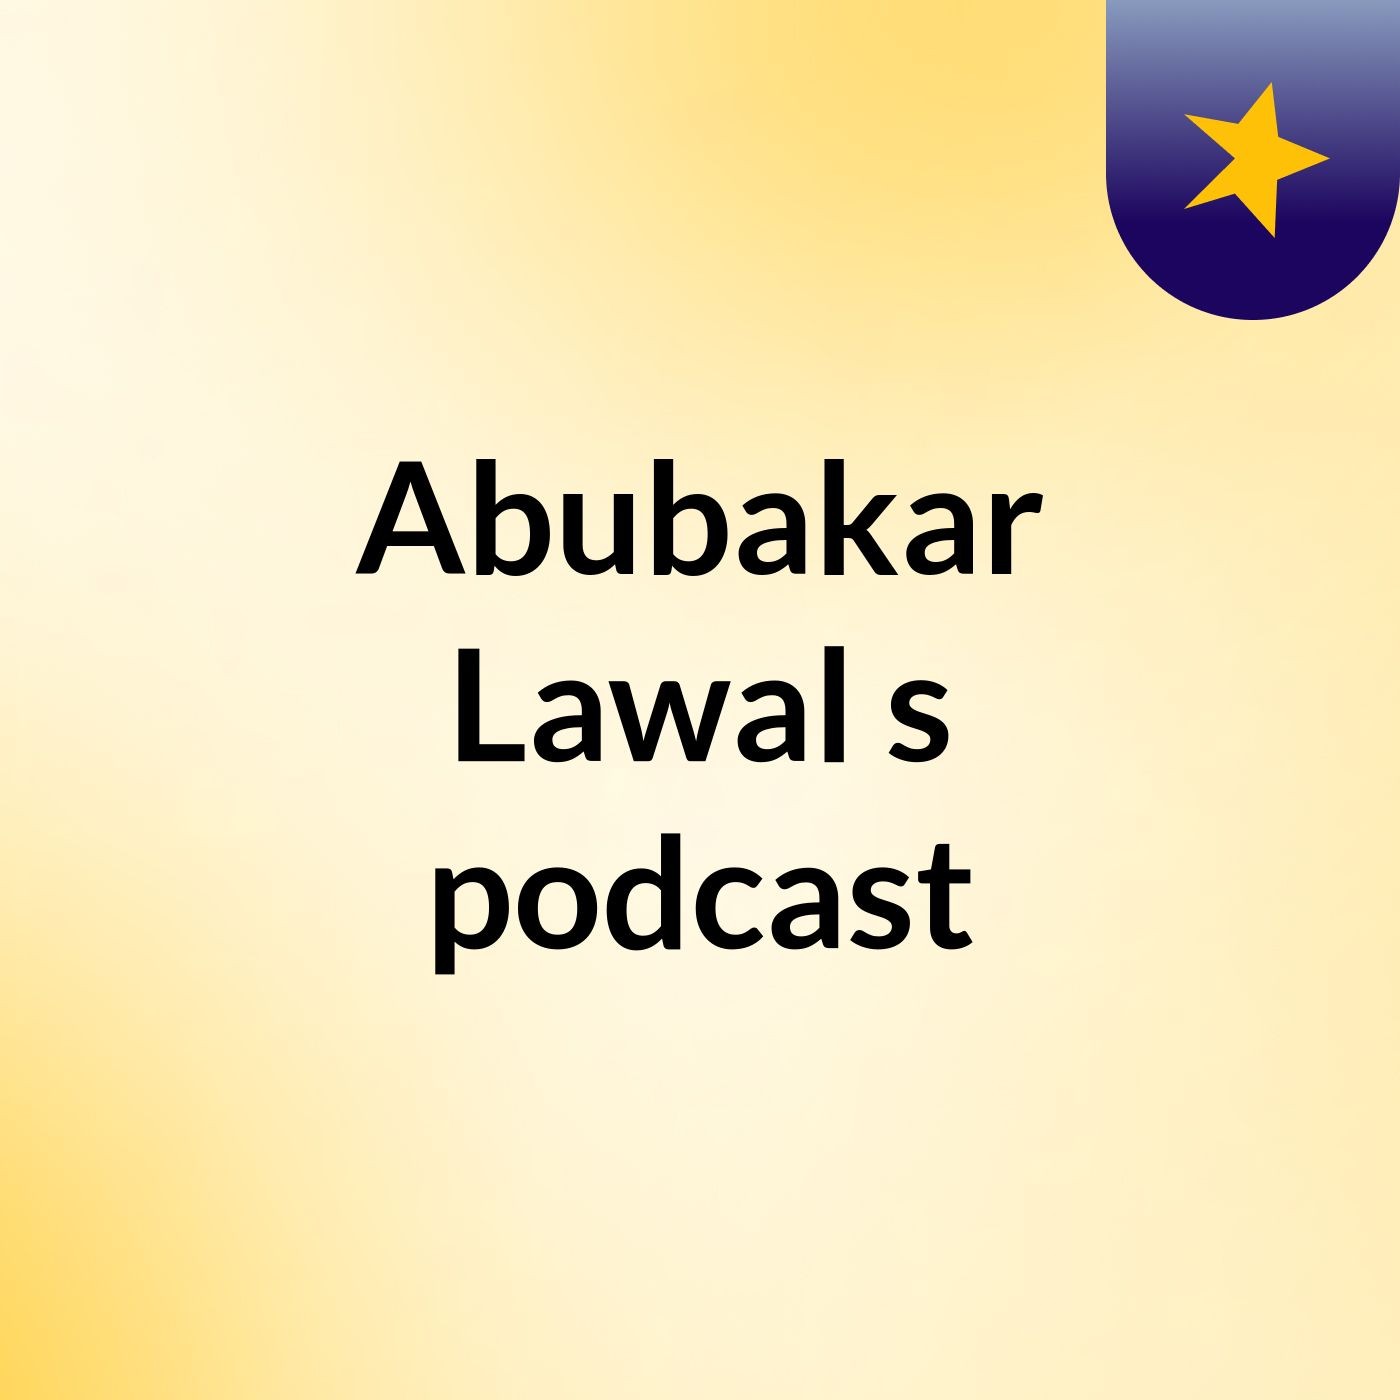 Abubakar Lawal's podcast